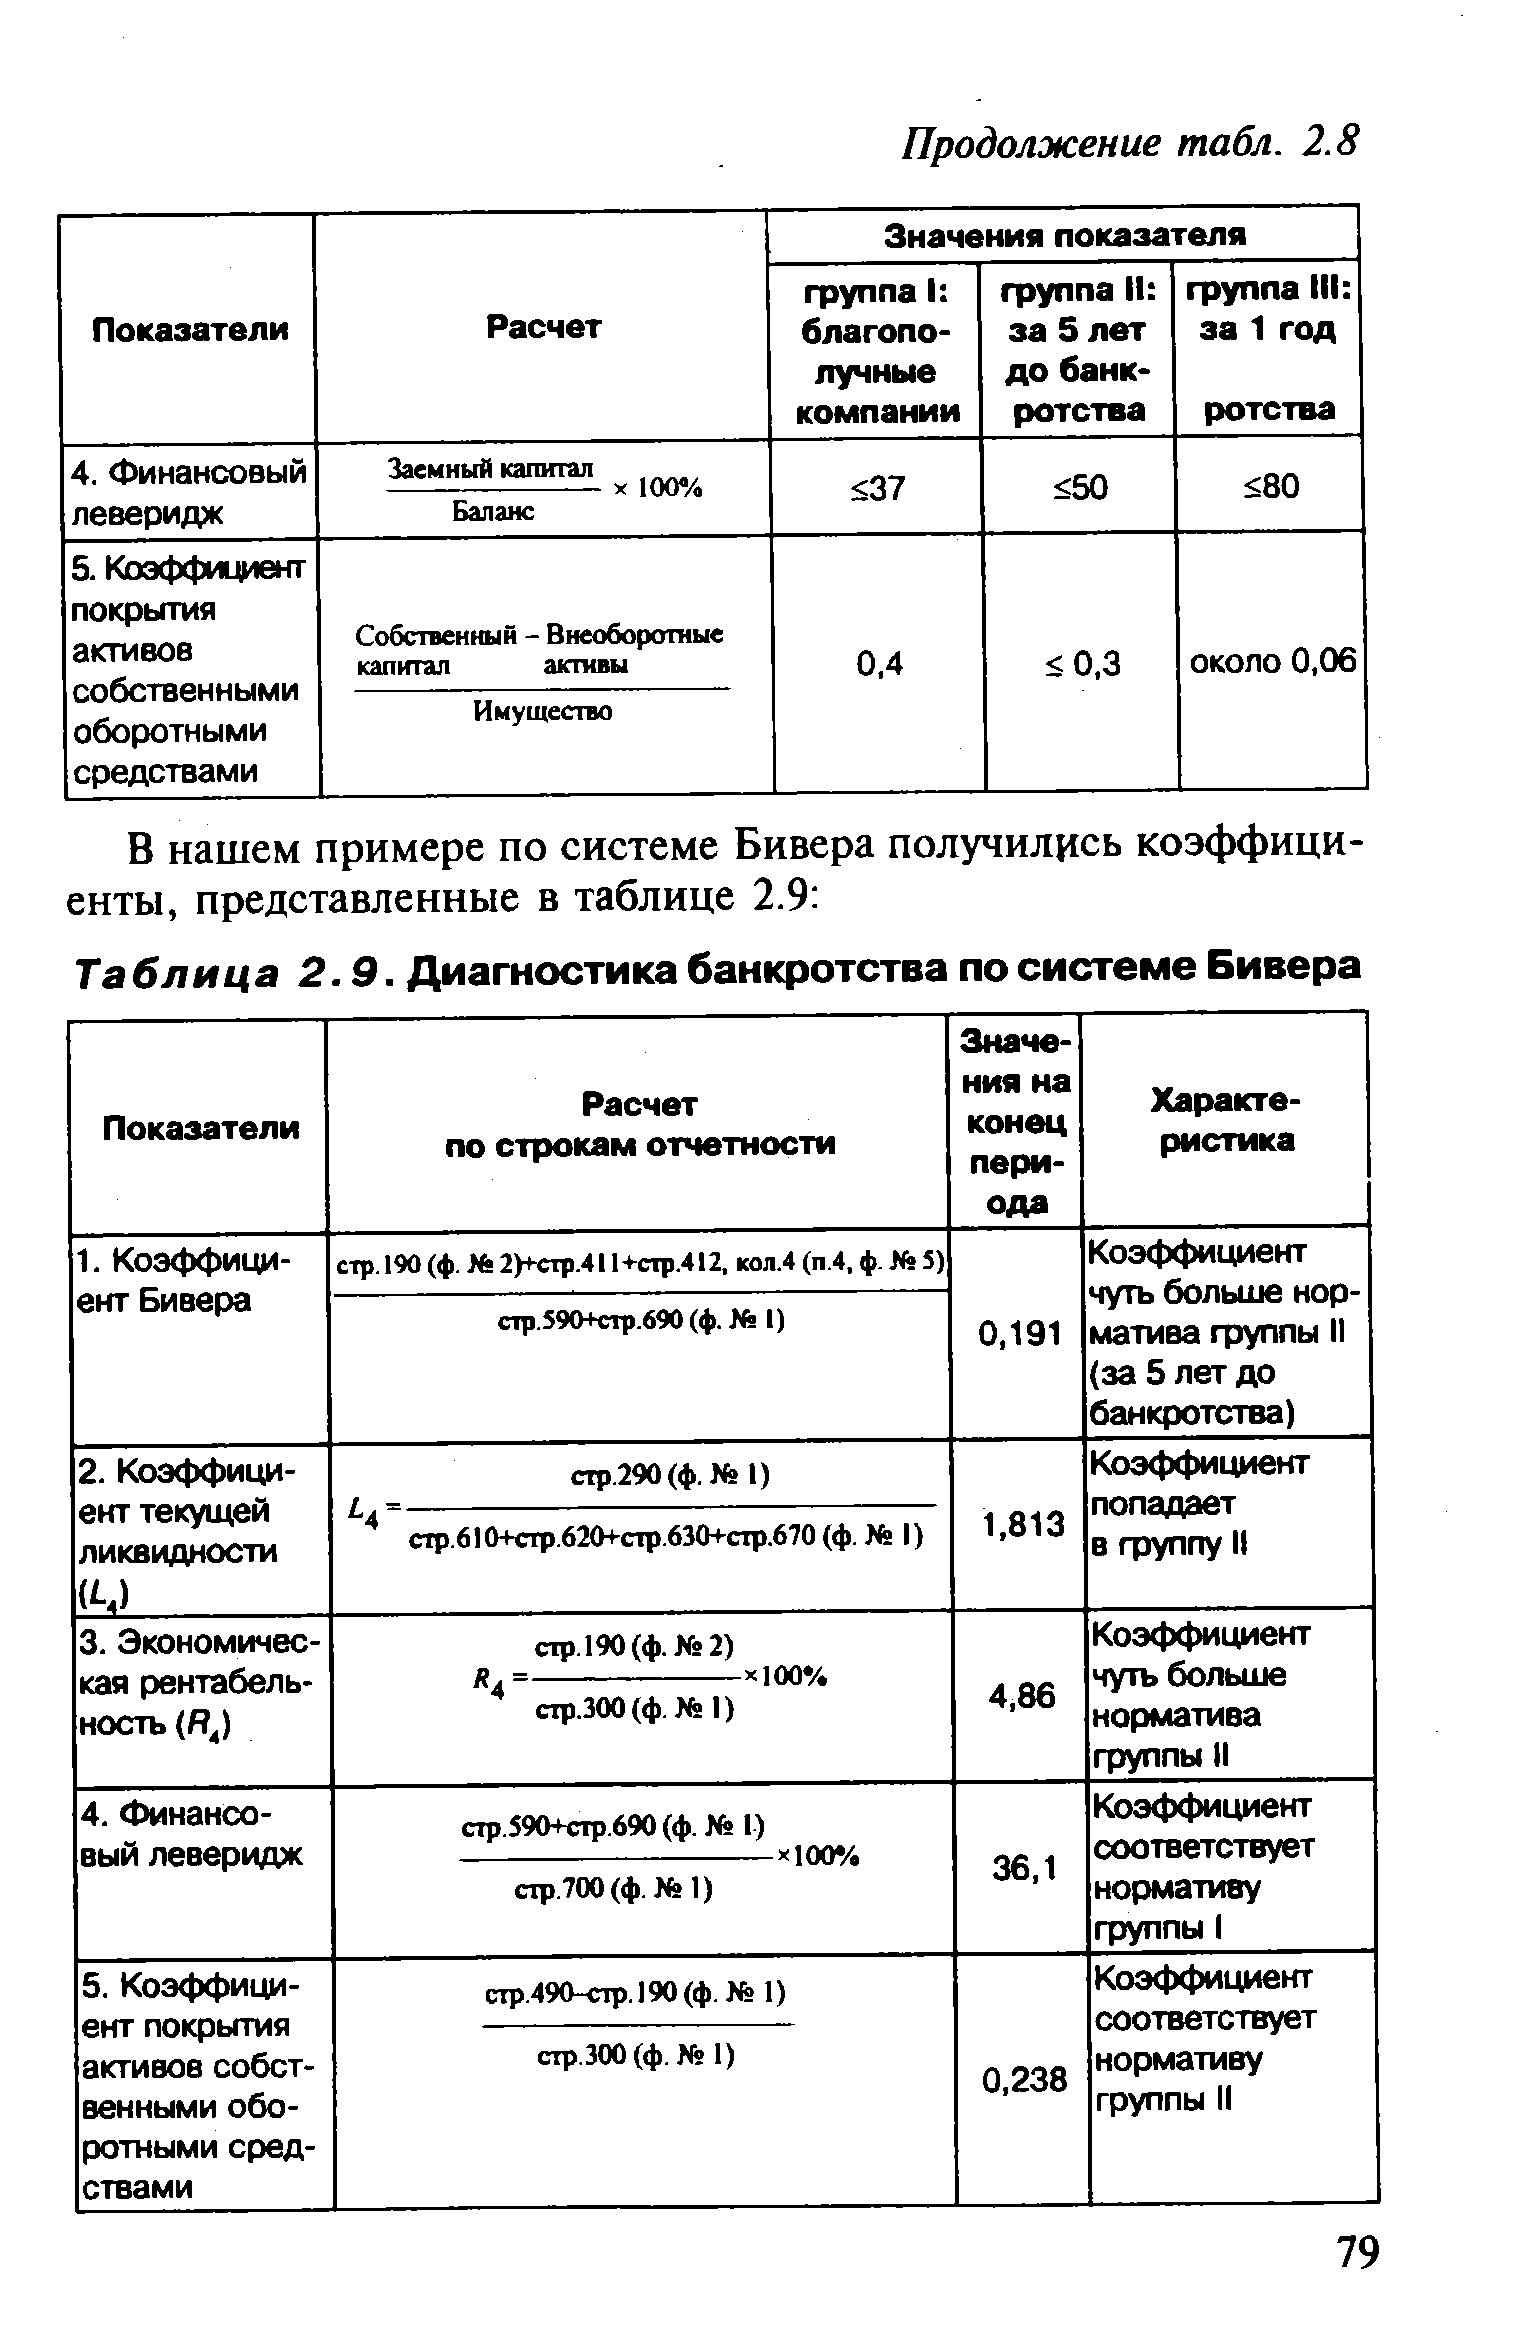 Таблица 2.9. Диагностика банкротства по системе Бивера
